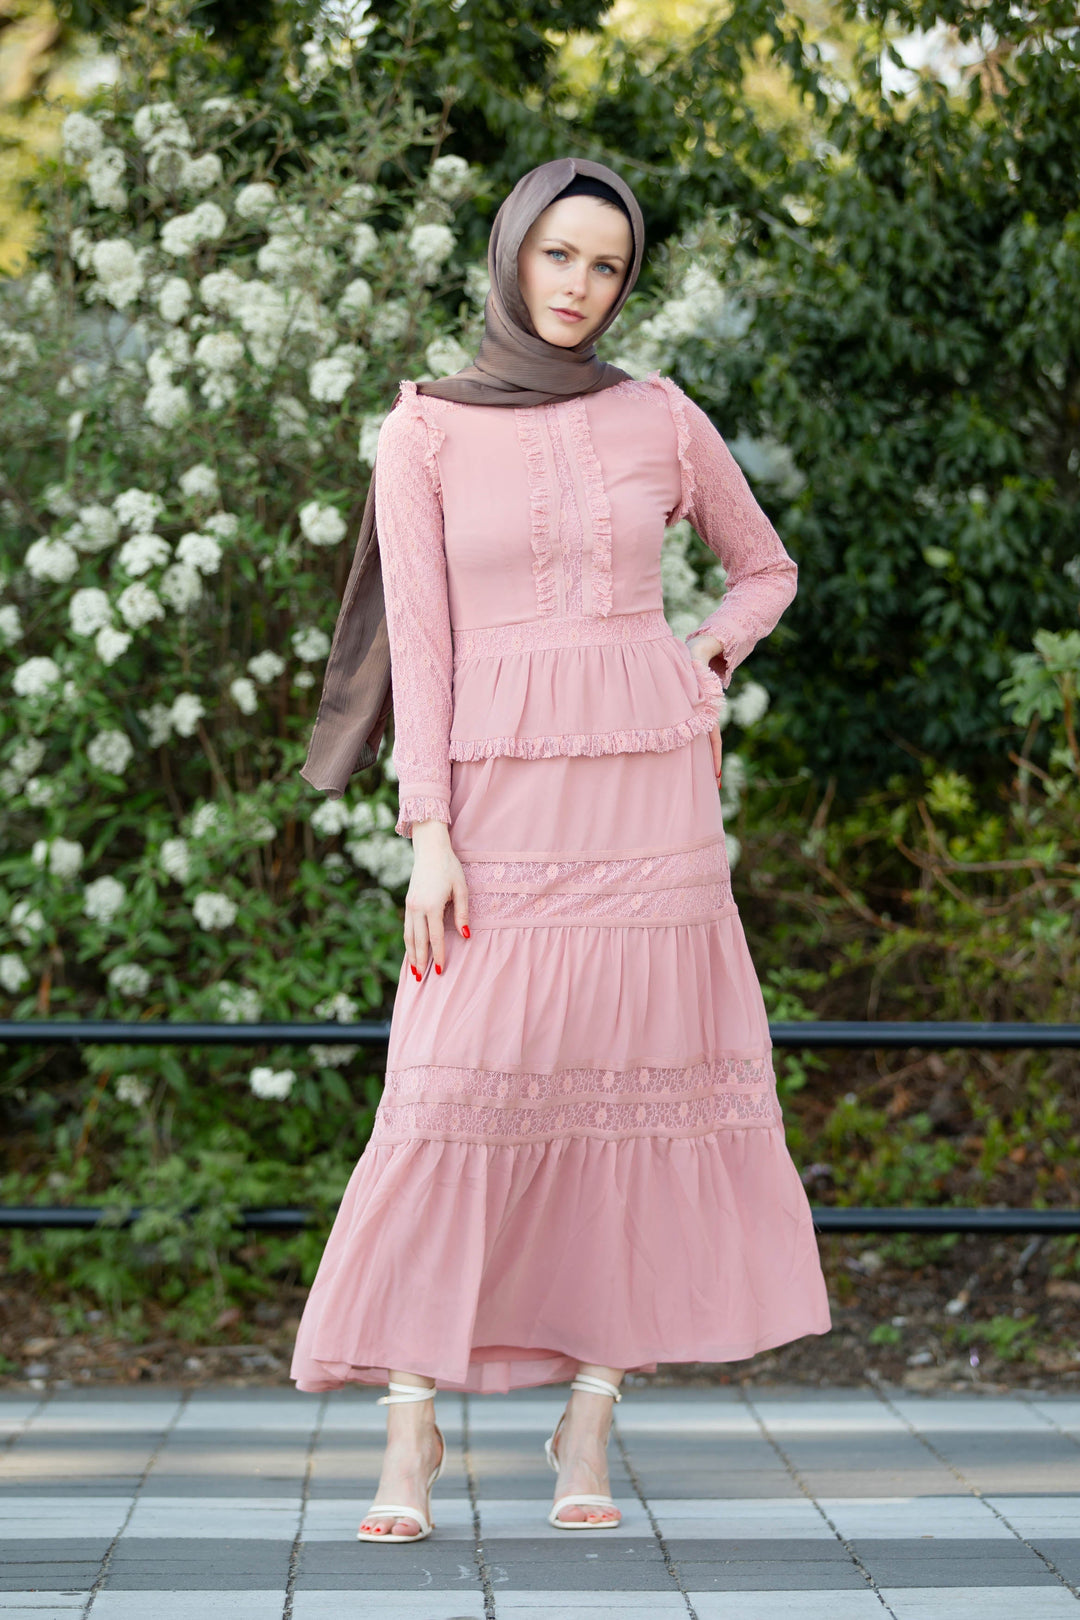 a woman wearing a pink dress and hijab